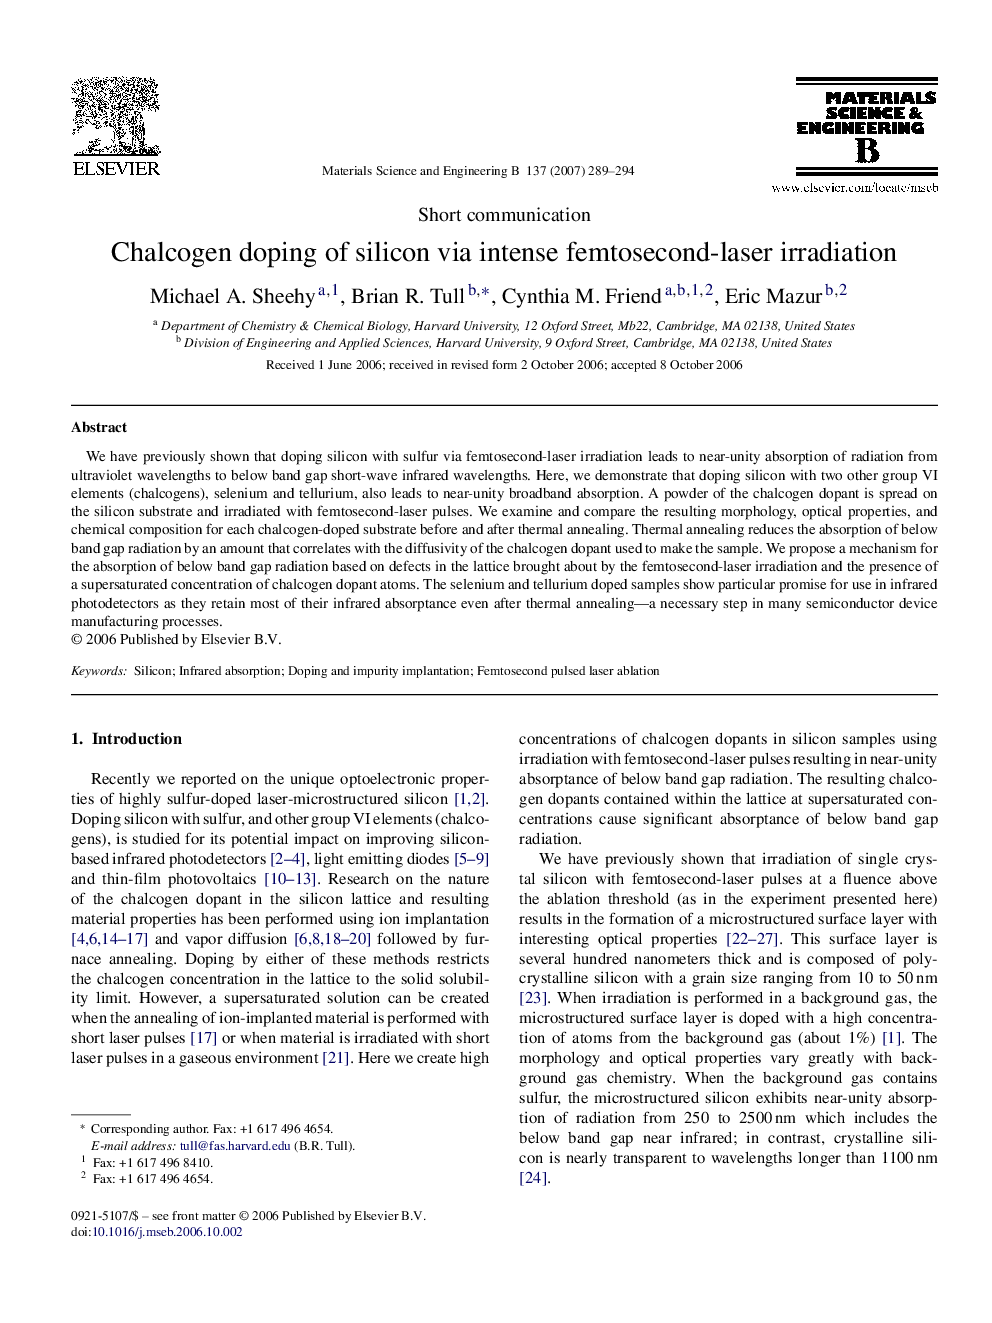 Chalcogen doping of silicon via intense femtosecond-laser irradiation